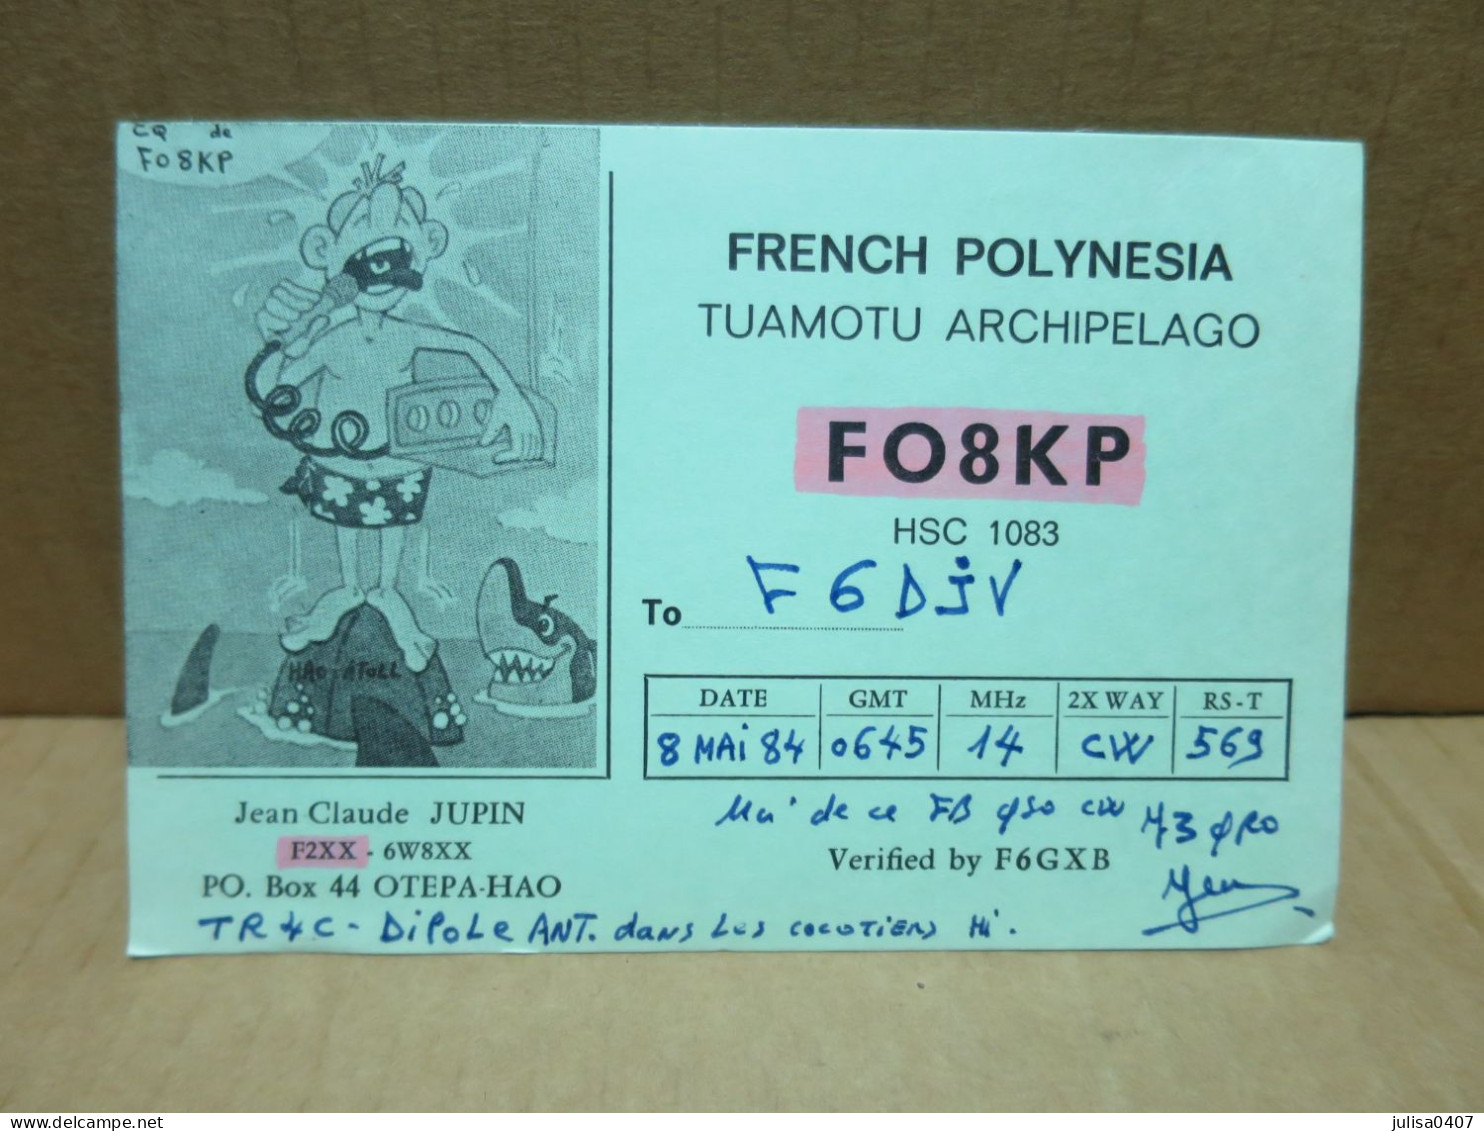 POLYNESIE Française TUAMOTU Carte Radio Amateur Illustrée - Polynésie Française